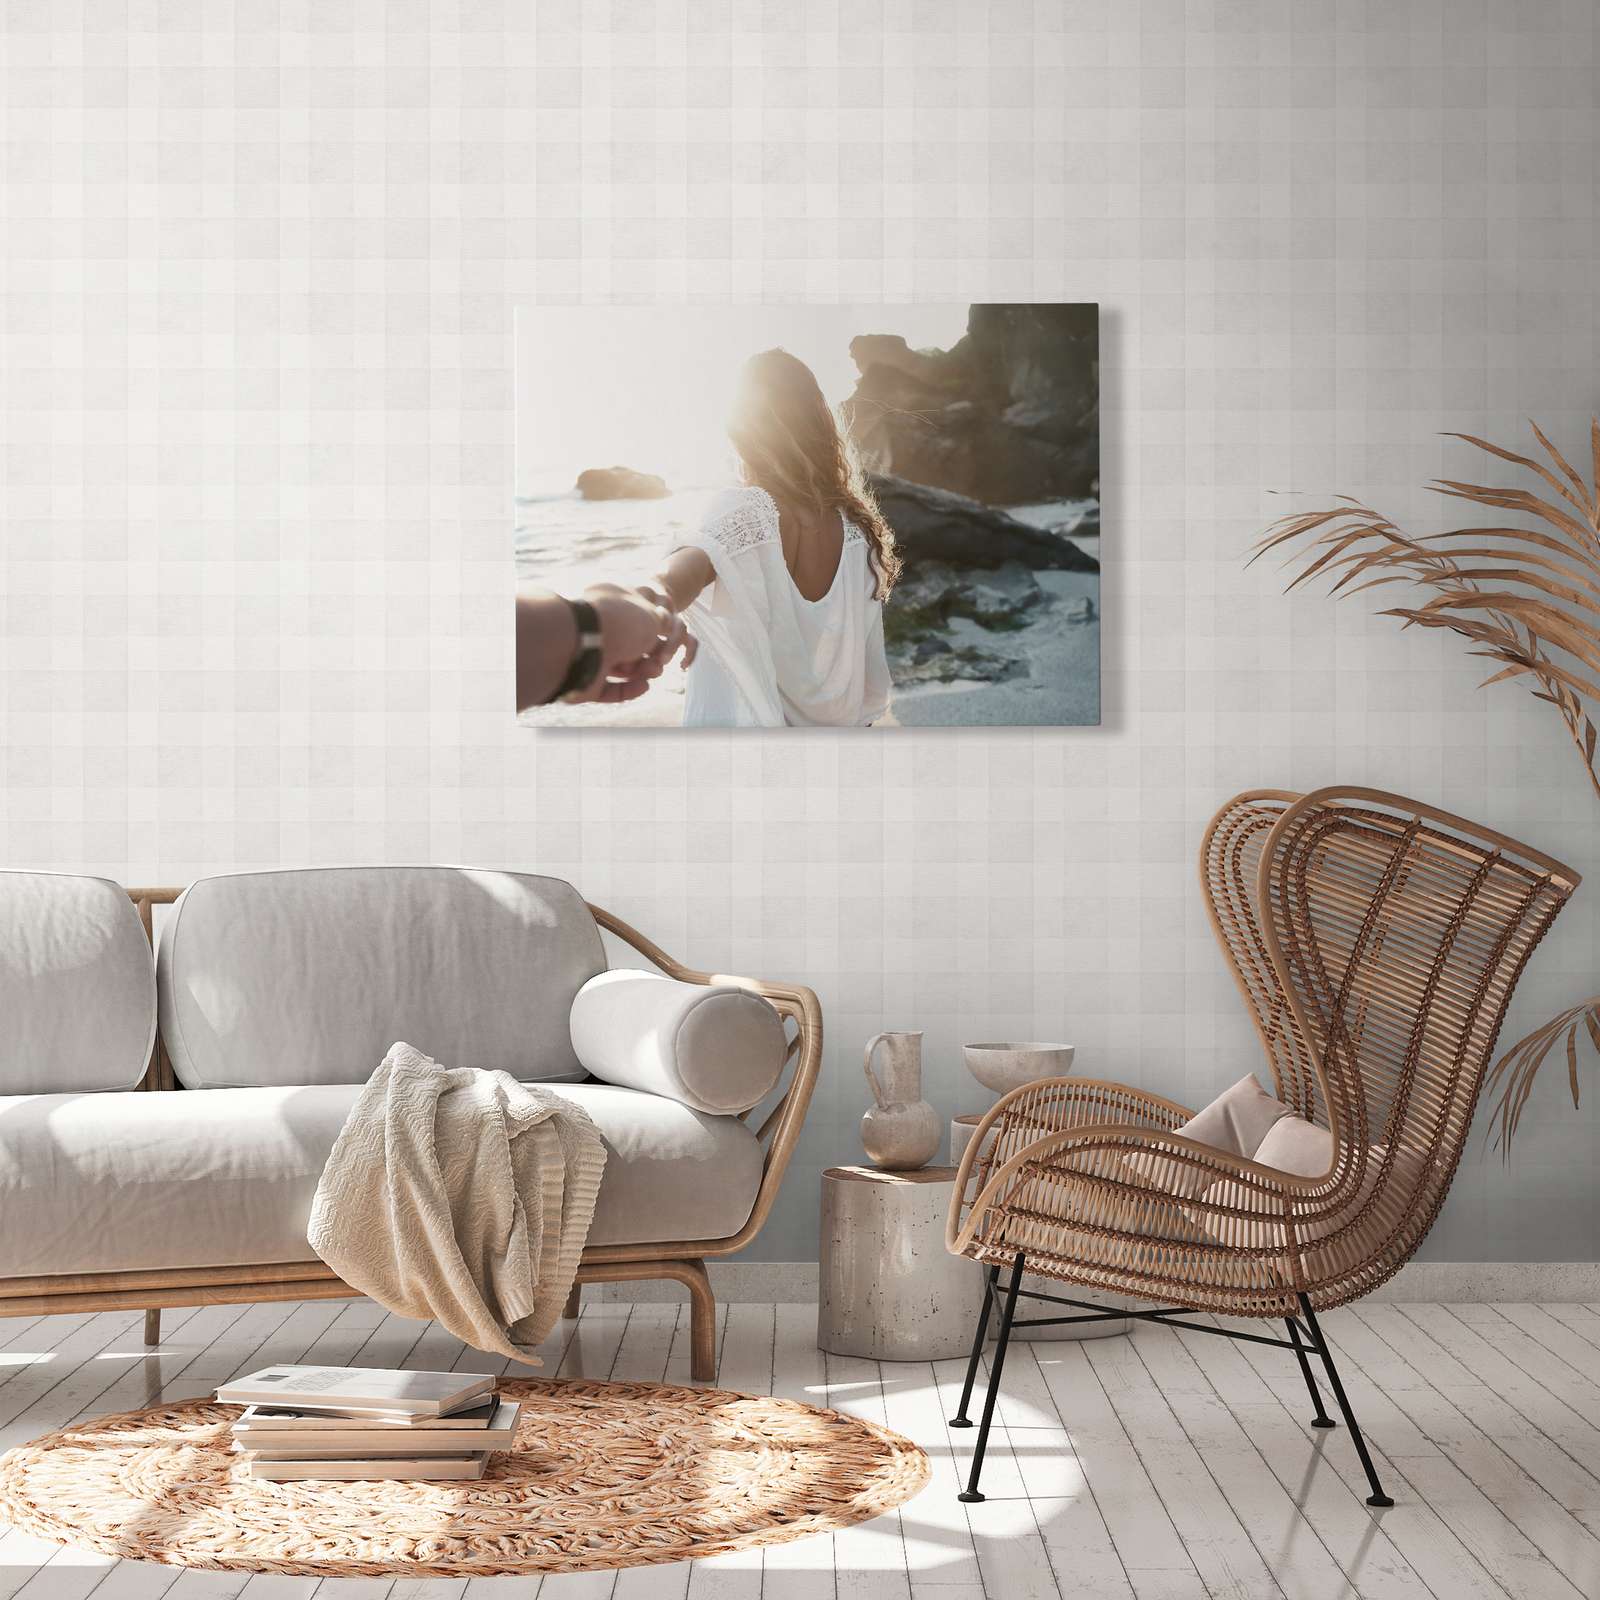             Linen optic wallpaper with check pattern PVC-free - Grey
        